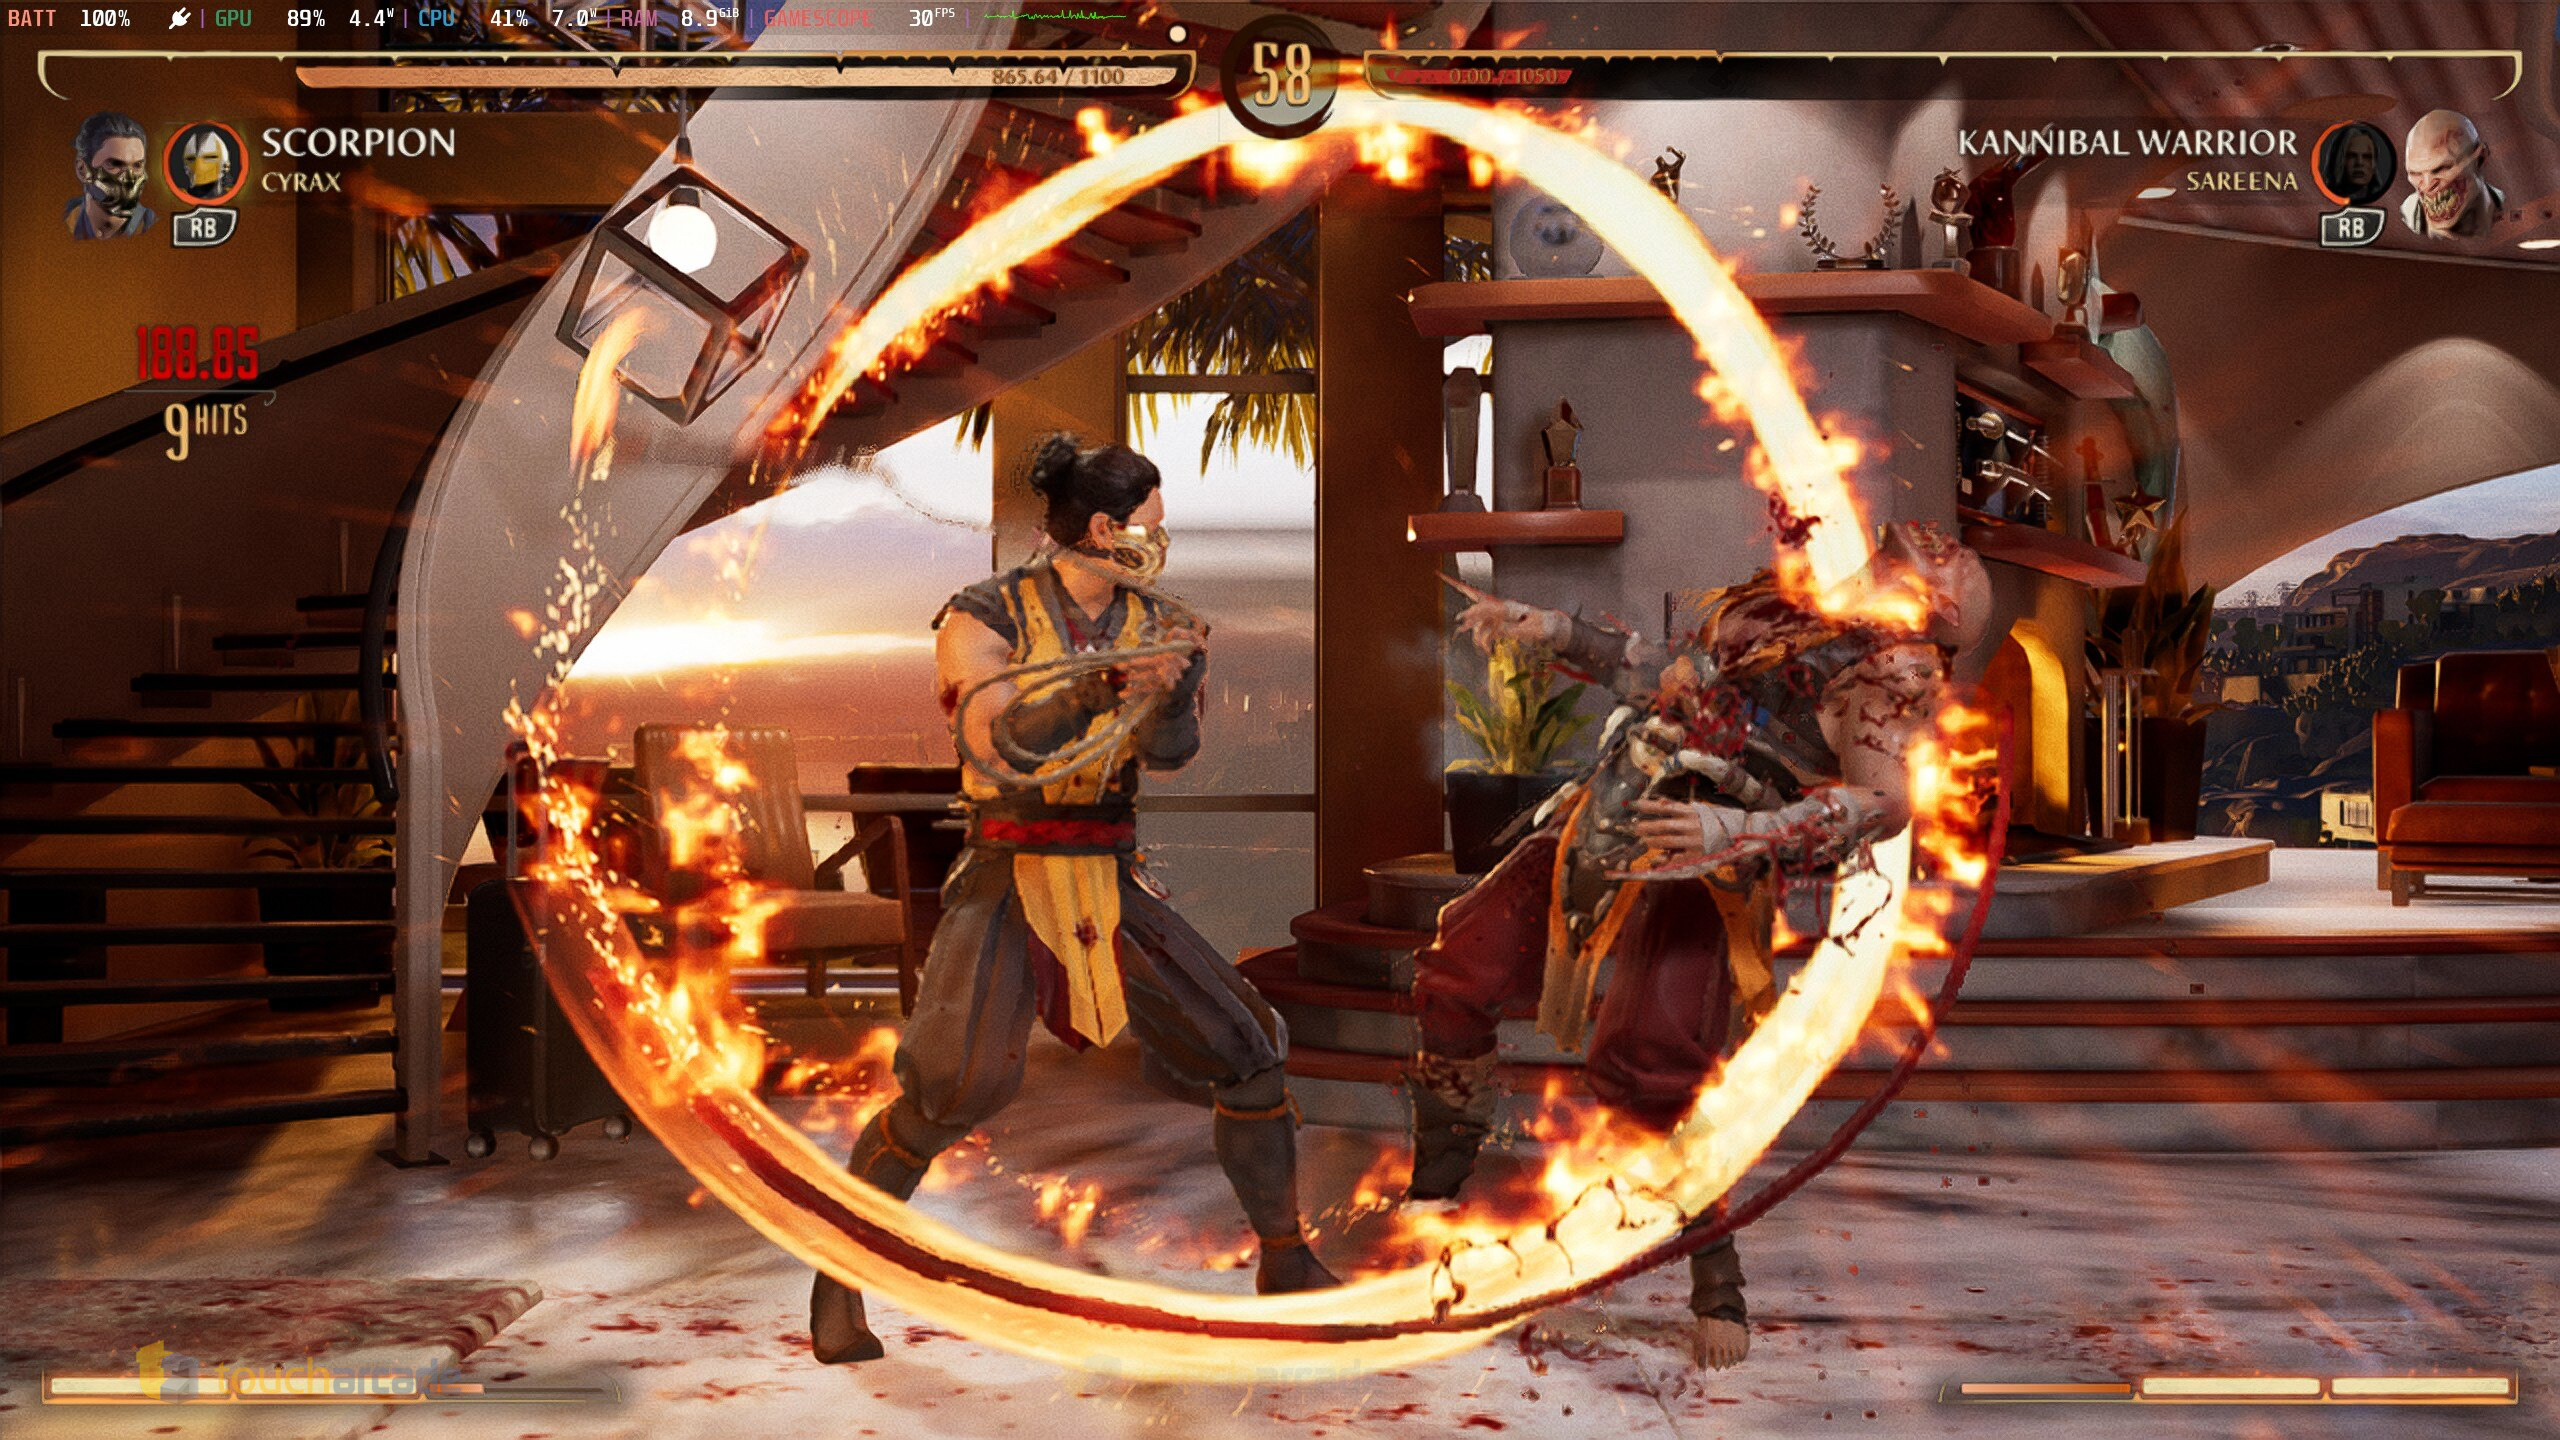 Steam Deck - Mortal Kombat 1 Gameplay  FSR 2 - SteamOS - CryoUtilities 